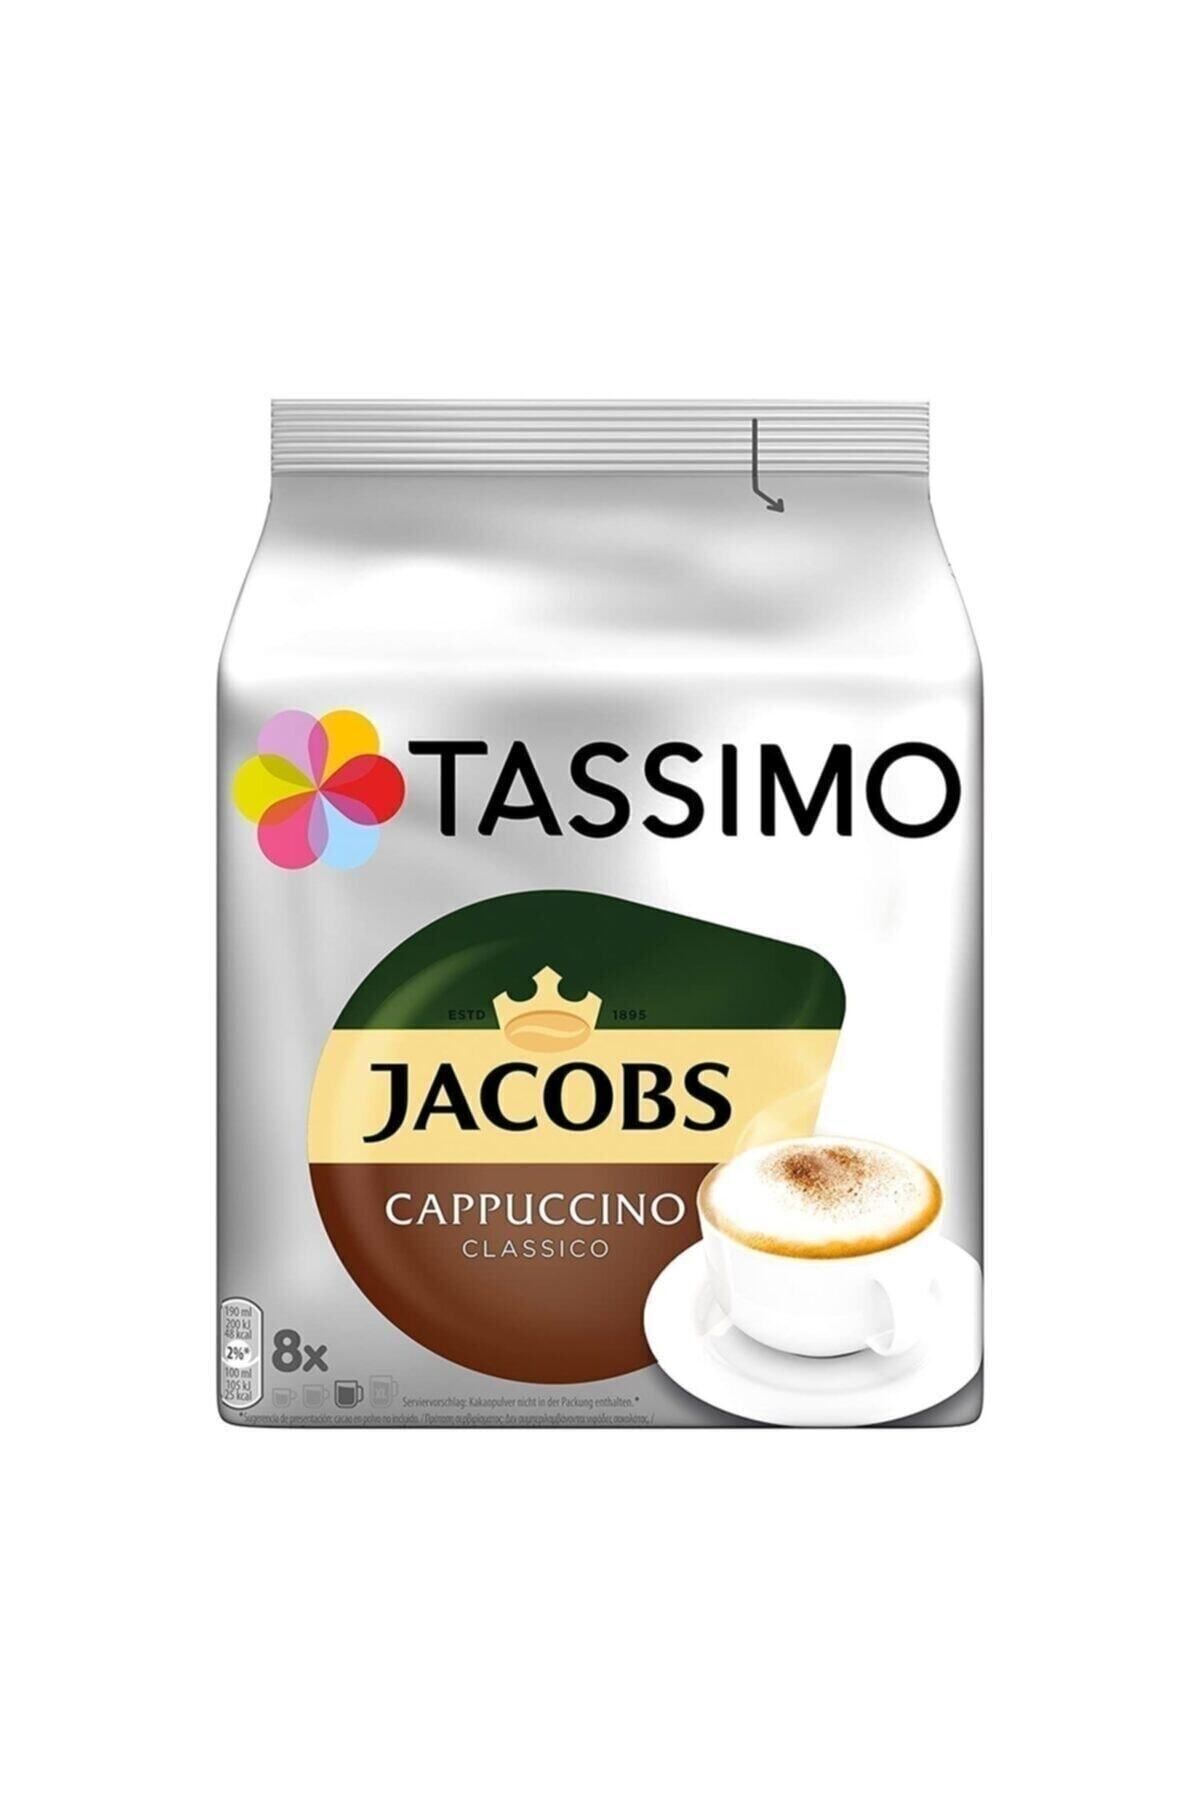 tassimo Jacobs Cappuccino Classico Capsule Coffee